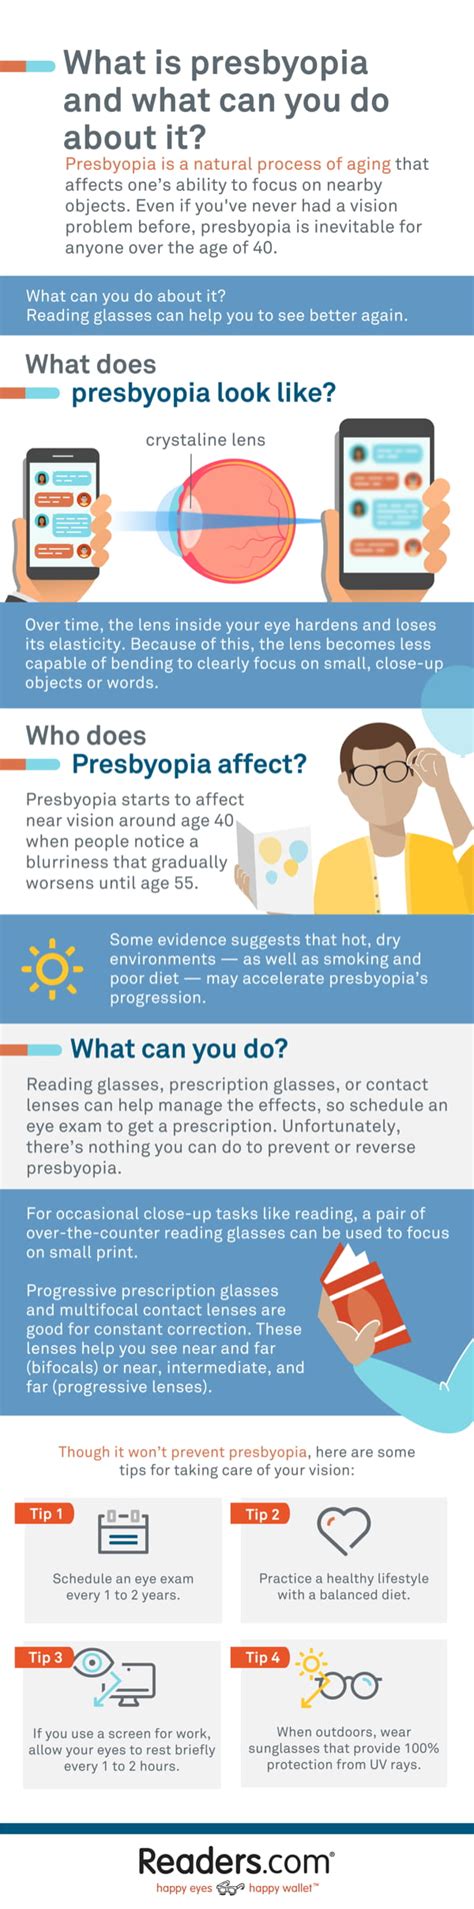 Presbyopia - Causes, Symptoms, and Treatment | Readers.com®